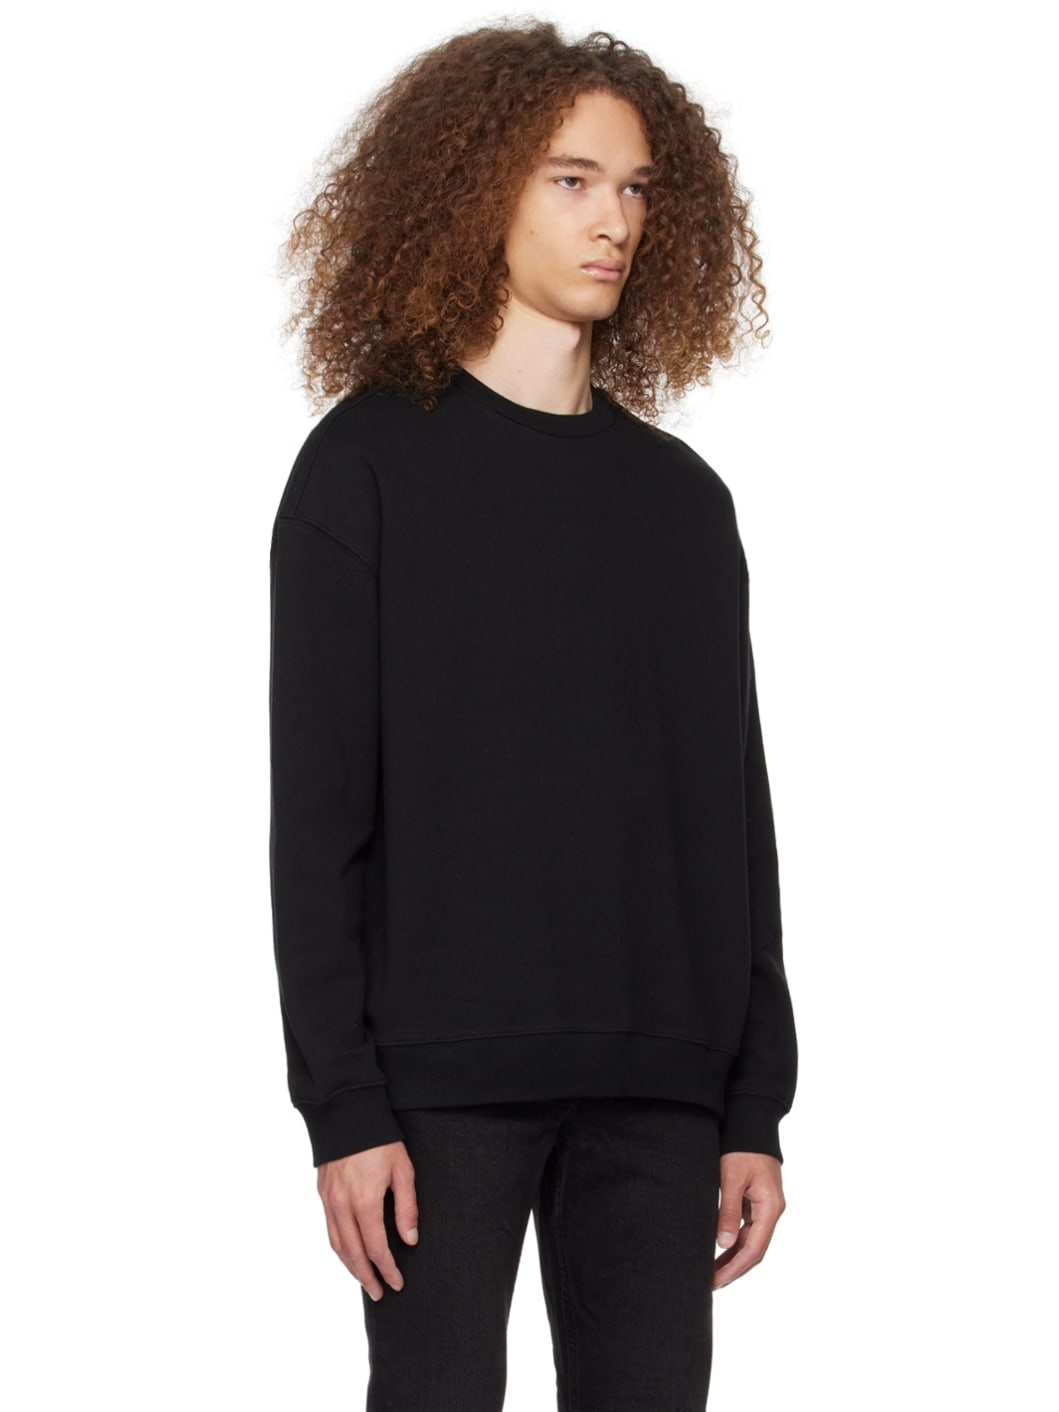 Black 4X4 Biggie Sweatshirt - 2